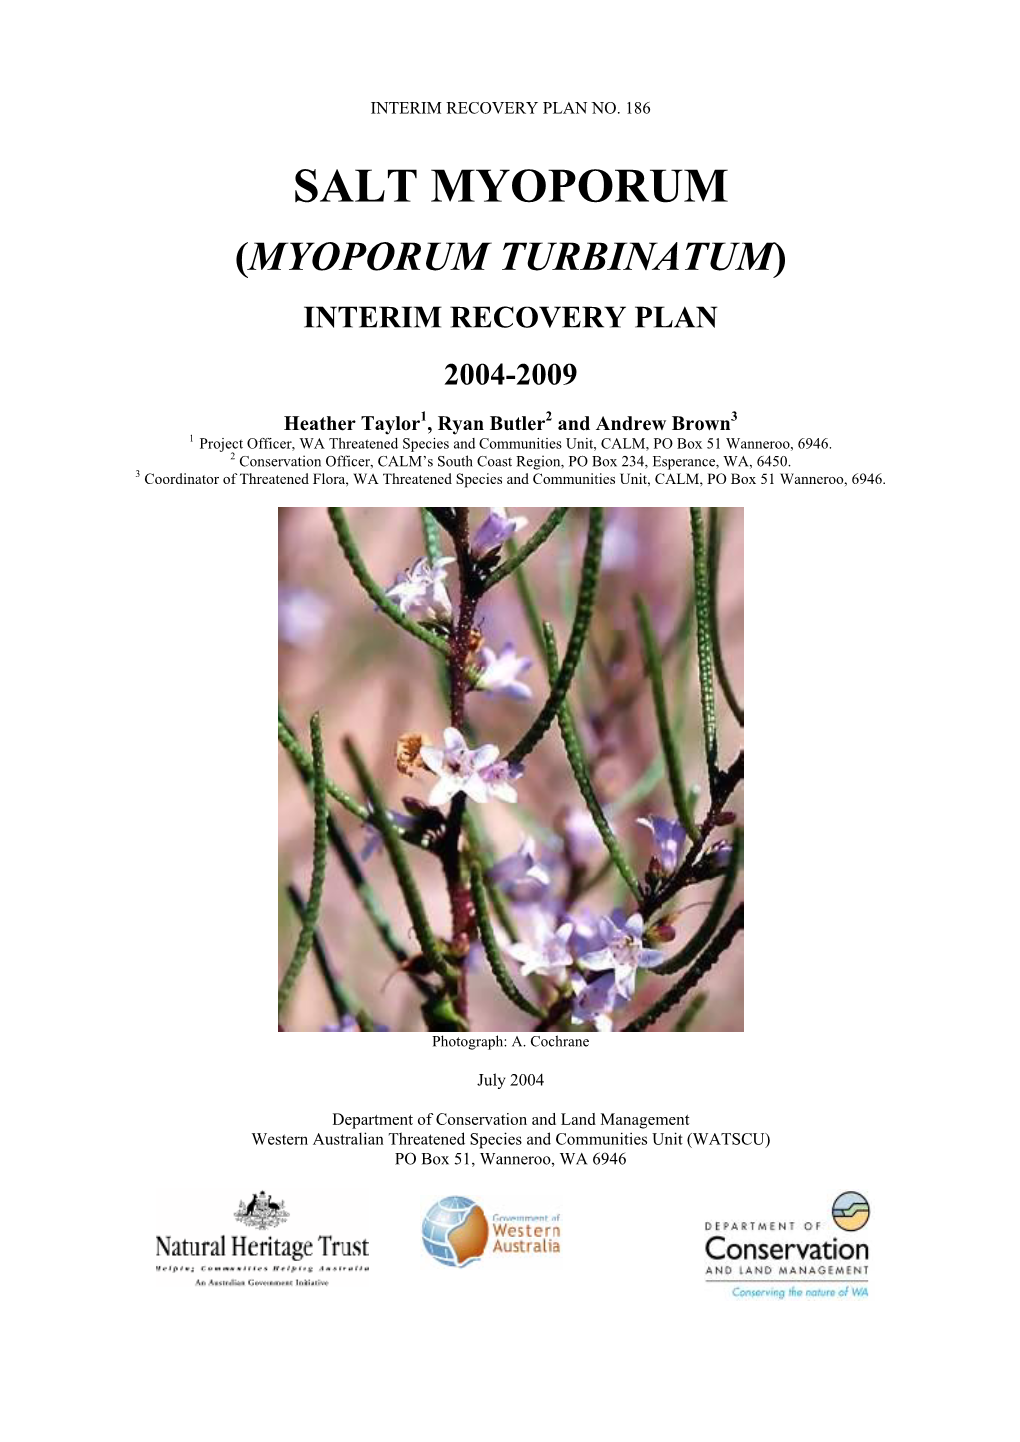 Myoporum Turbinatum) Interim Recovery Plan 2004-2009